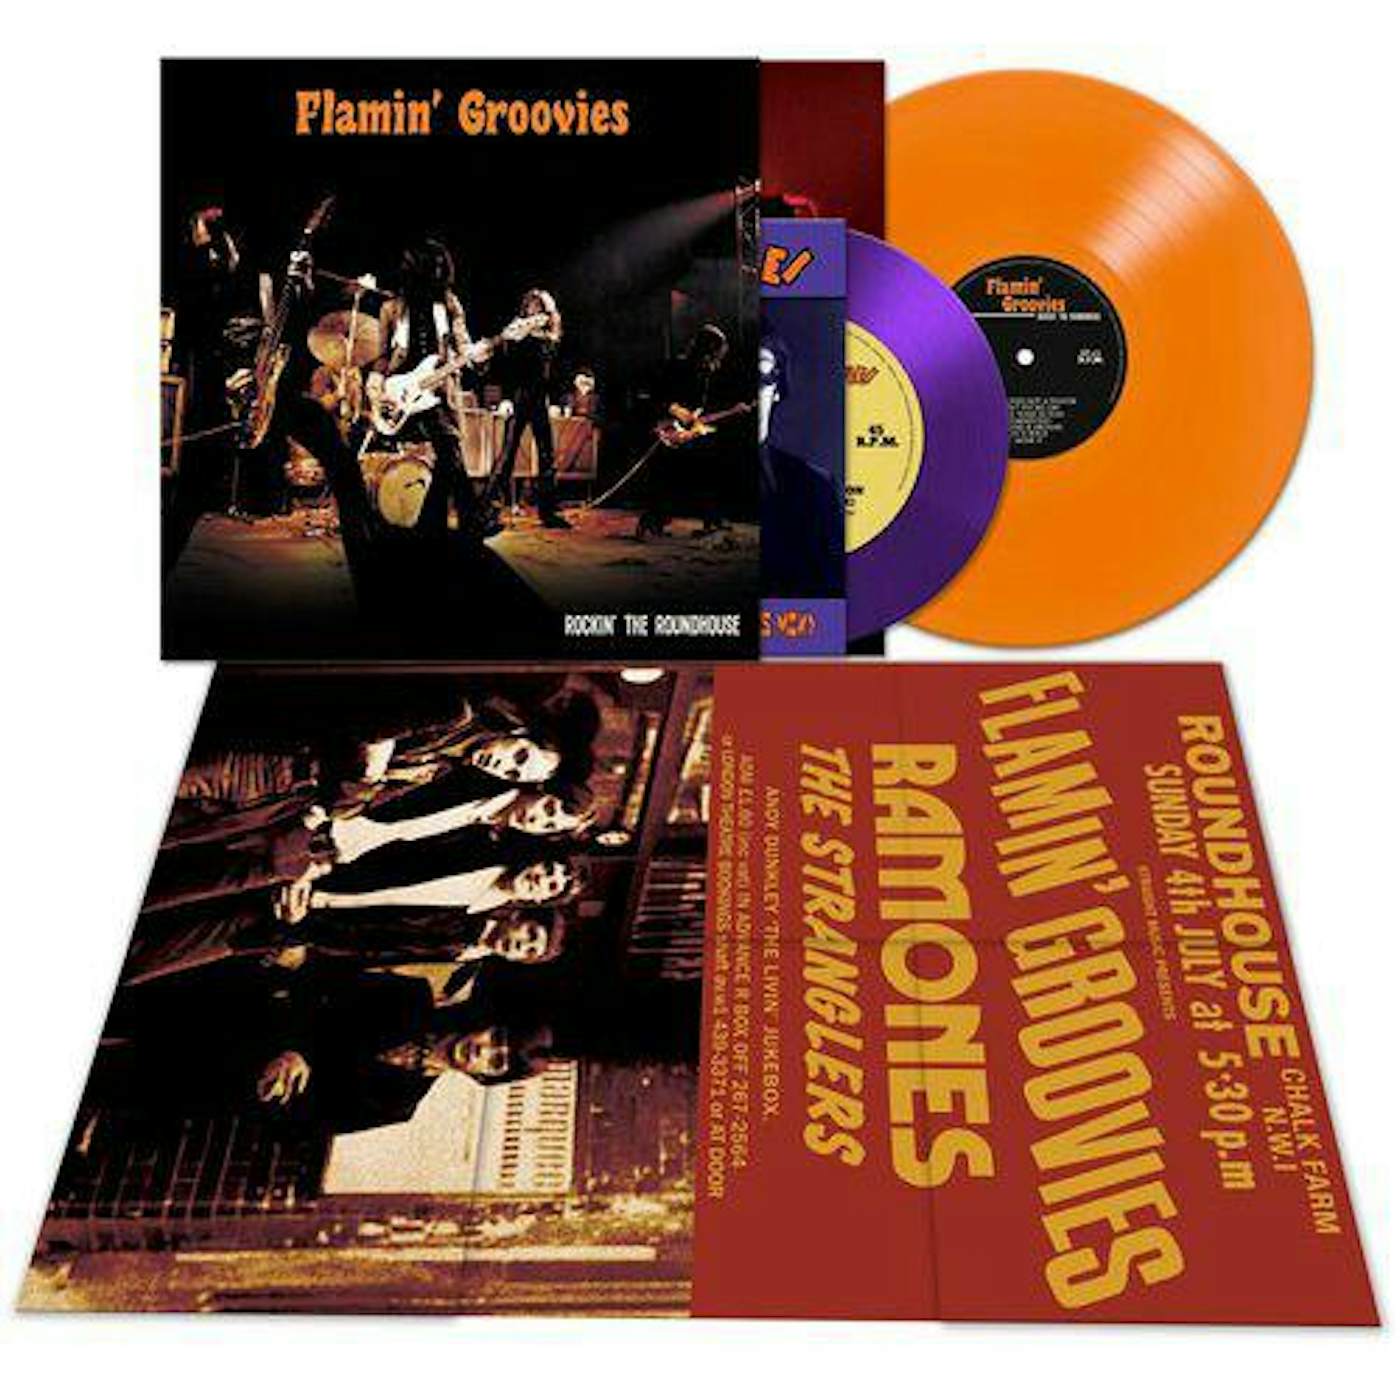 Flamin' Groovies Rockin' The Roundhouse (Orange) Vinyl Record